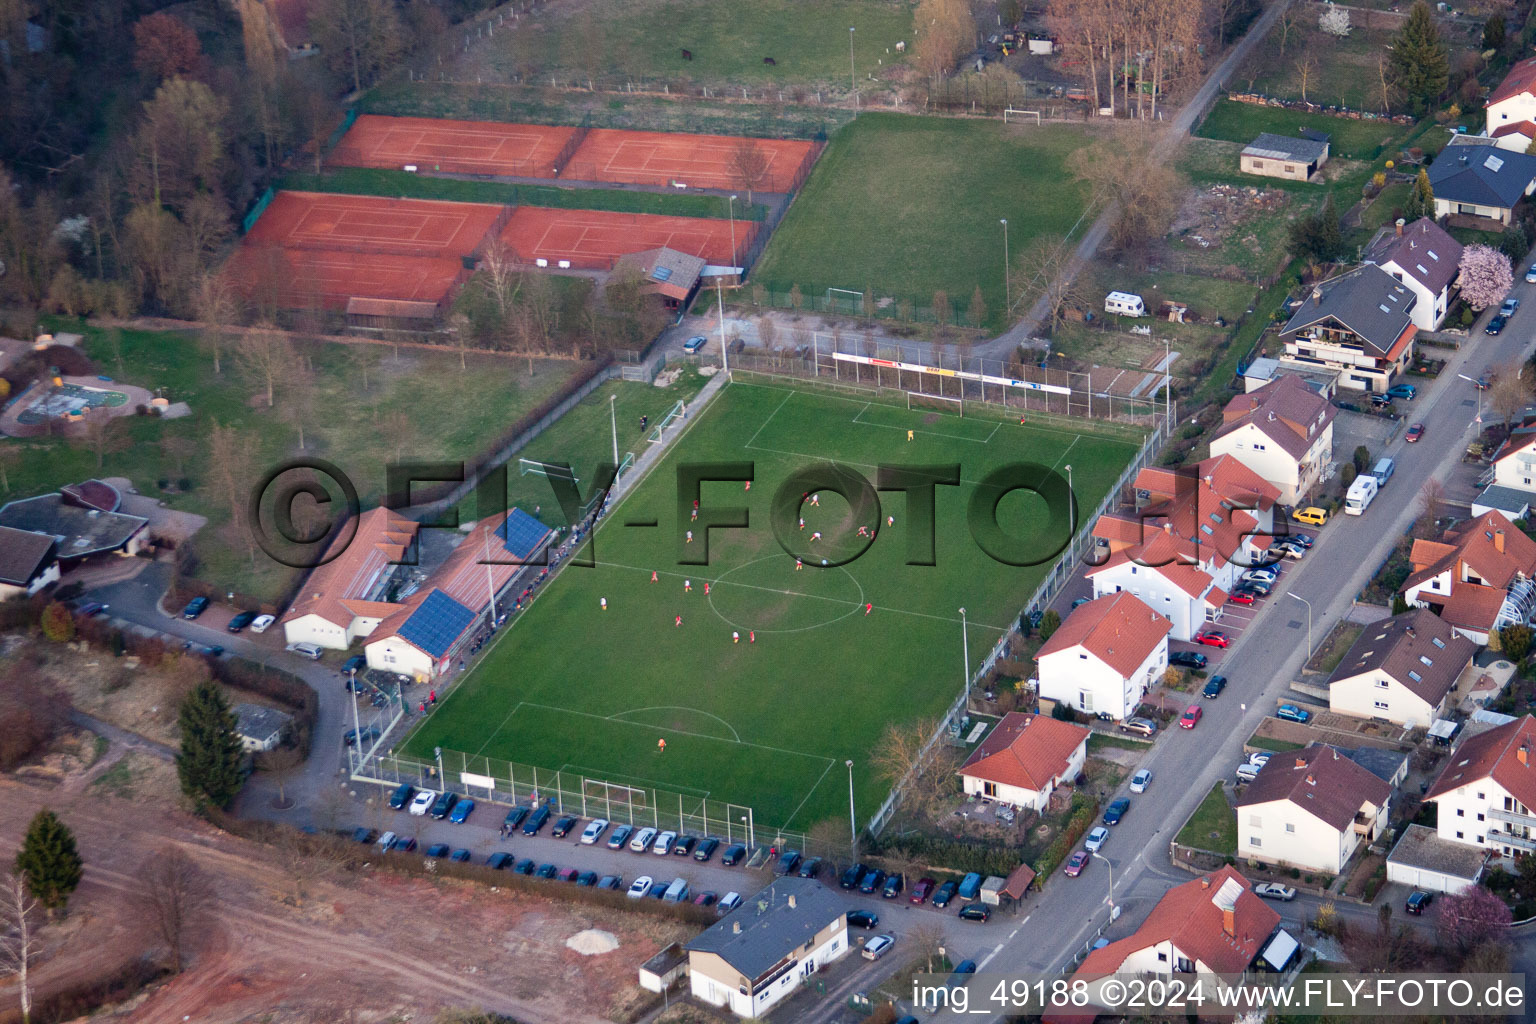 Drone recording of Sports fields in the district Ingenheim in Billigheim-Ingenheim in the state Rhineland-Palatinate, Germany